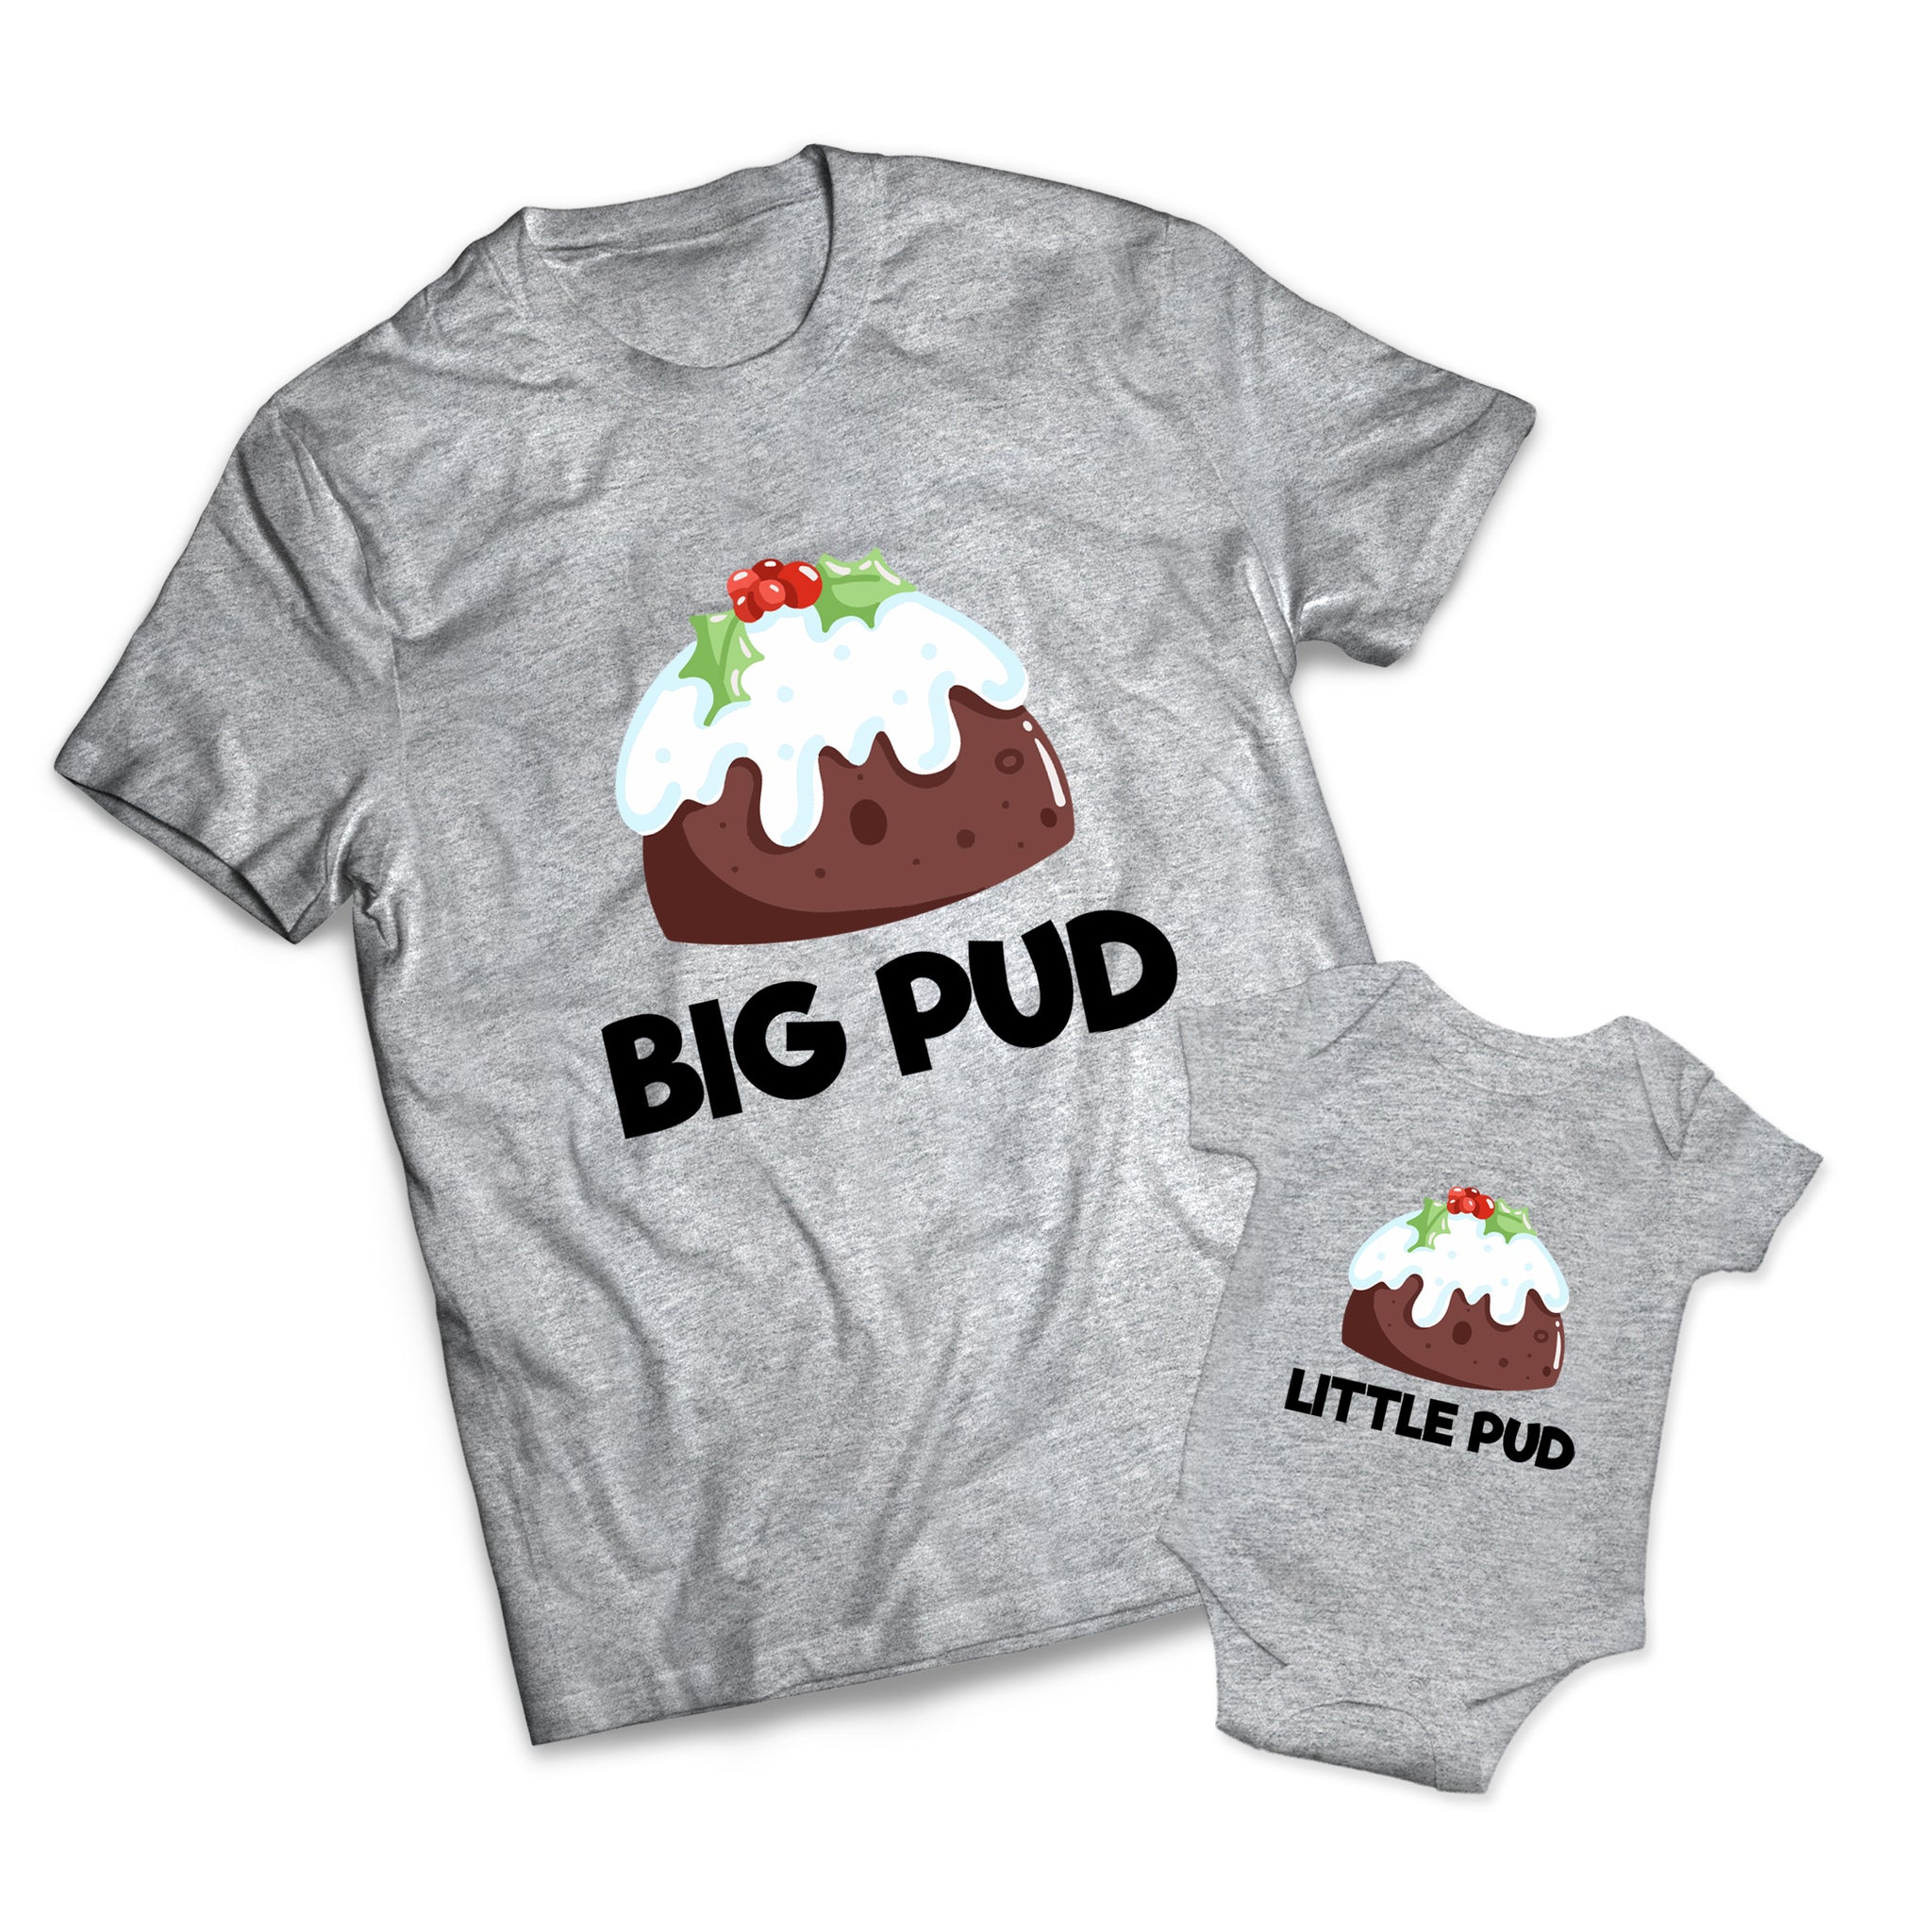 Big Pud Little Pud Set - Christmas -  Matching Shirts